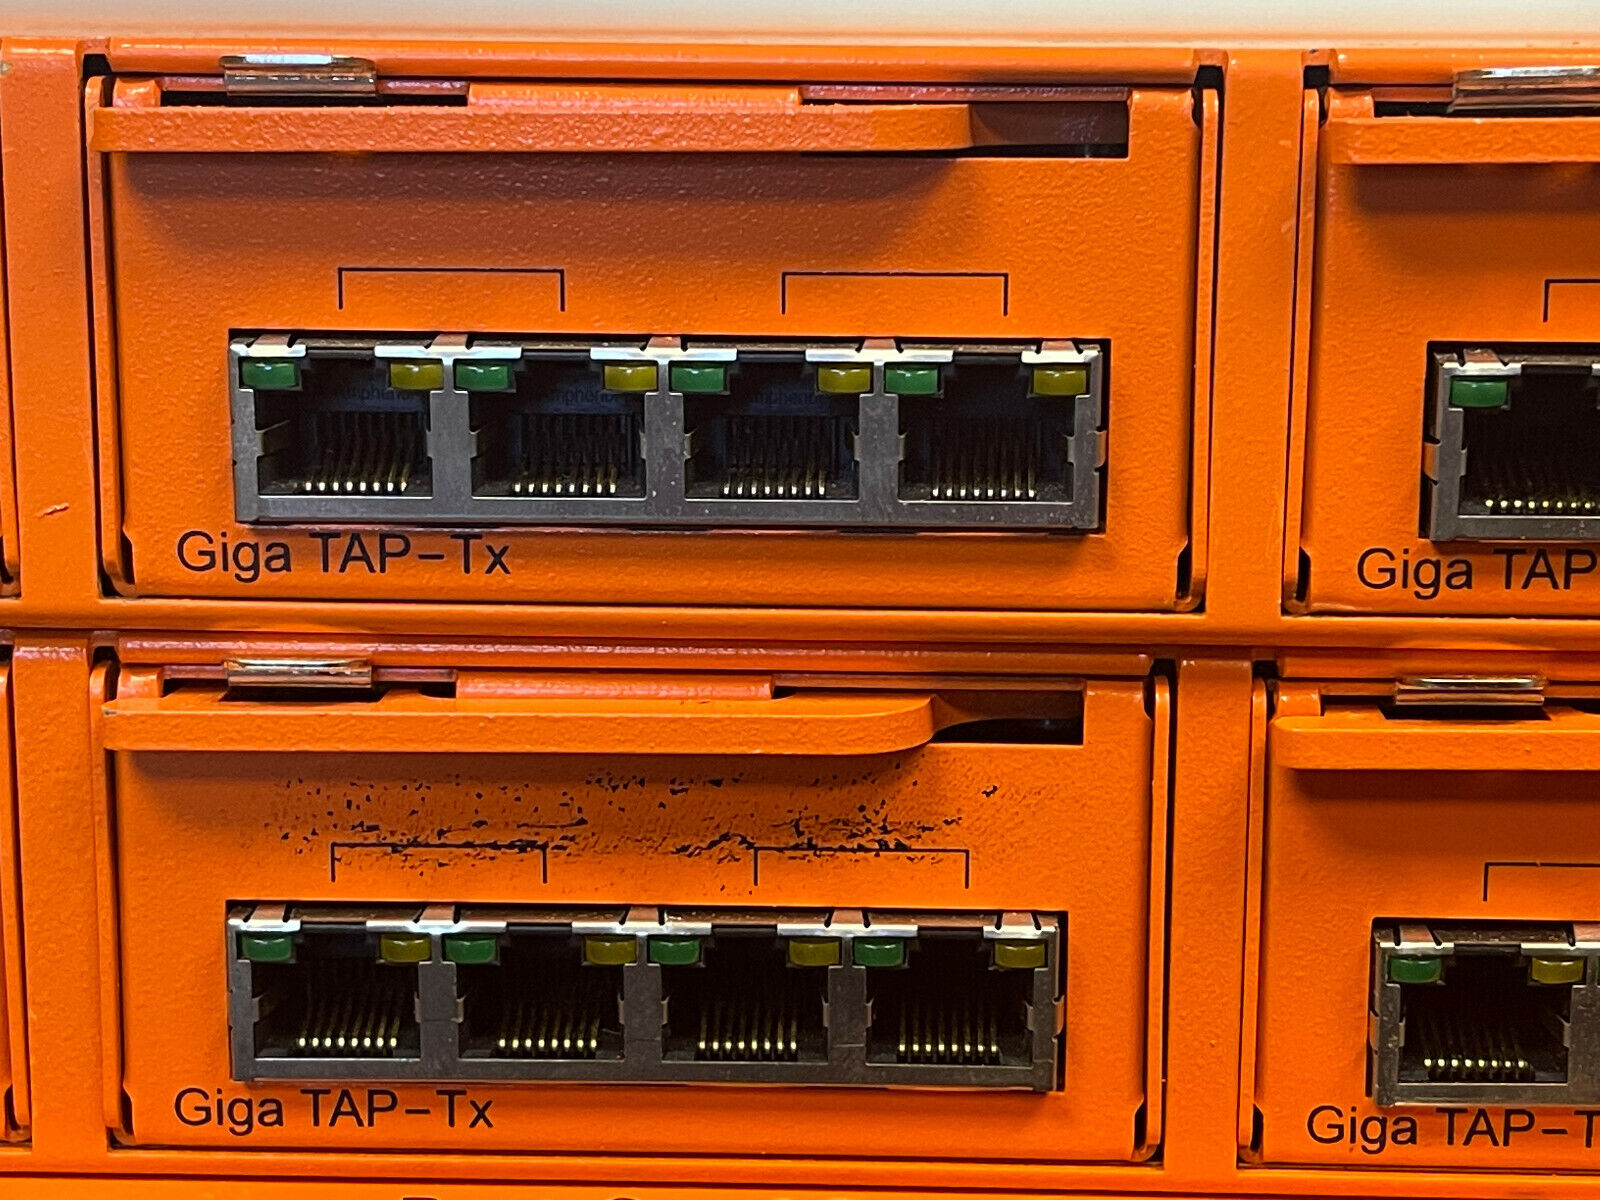 Gigamon GigaTAP-TX TAP-201 4 Port 2 Pair 10/100/1000 Mbps 1GbE RJ45 TAP Module GigaVUE.